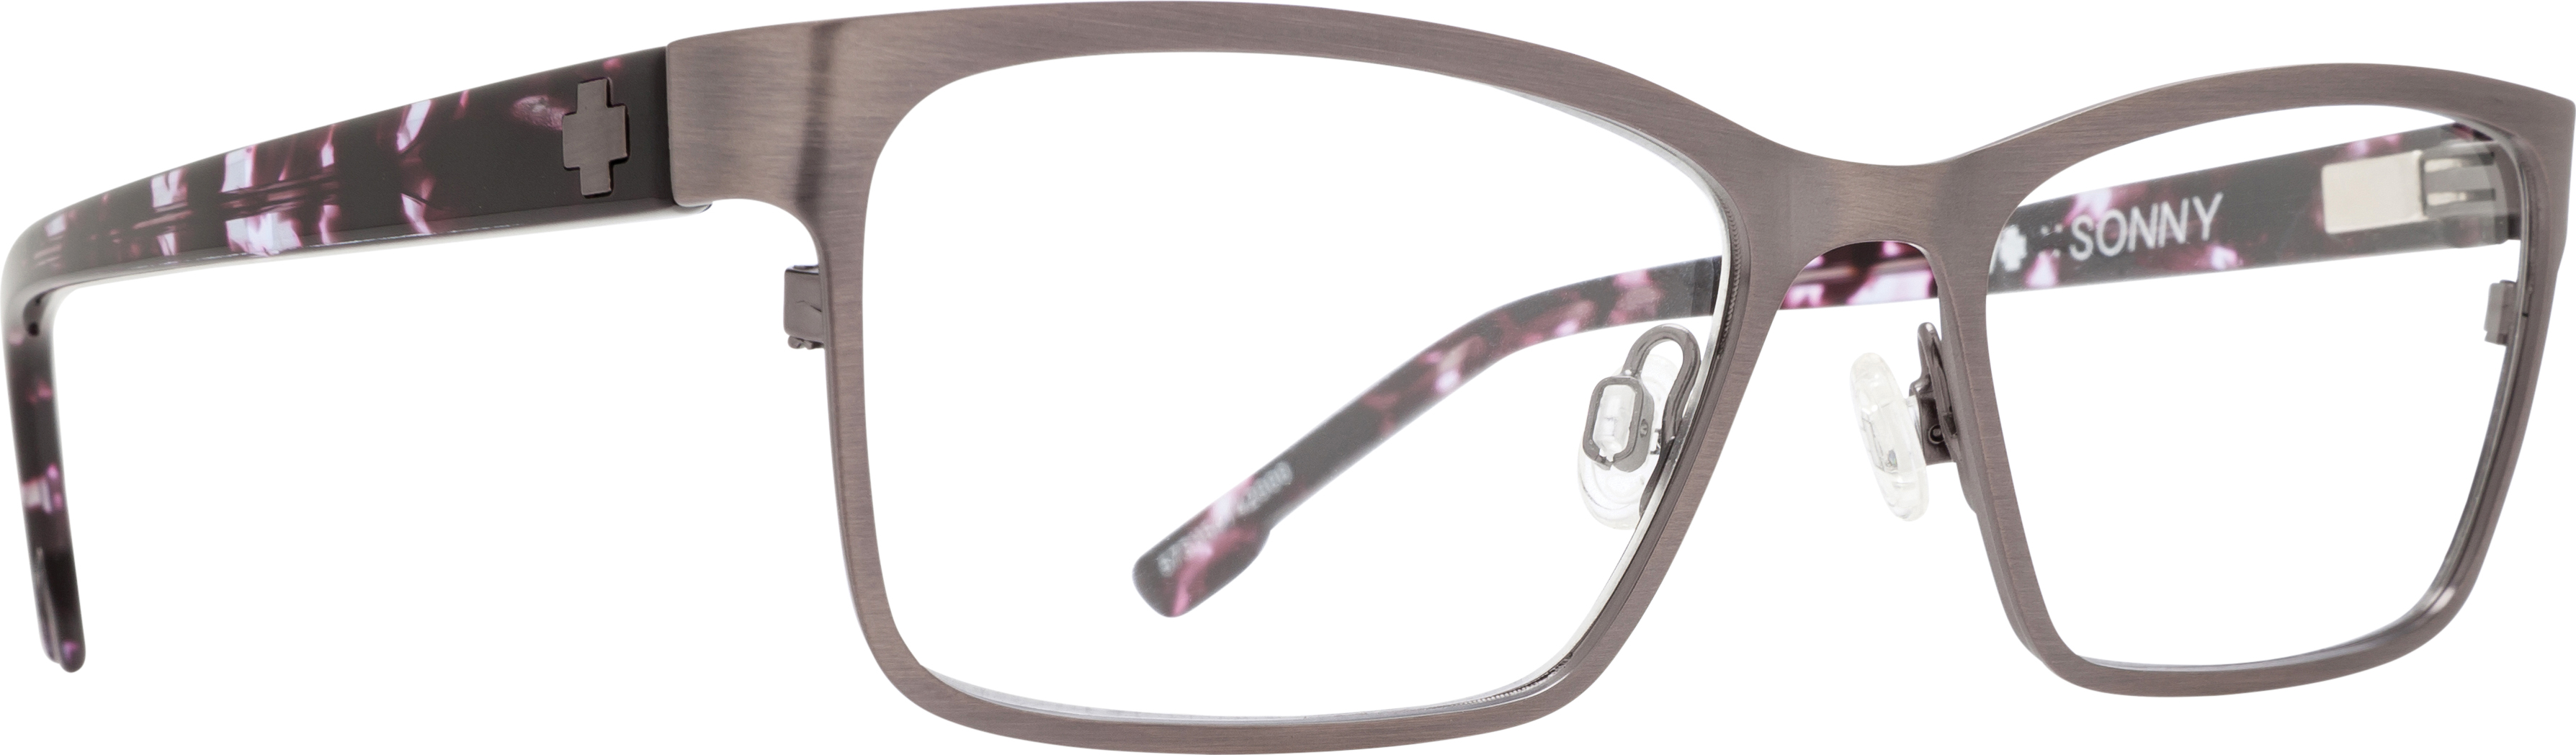 Picture of Spy Eyeglasses SONNY